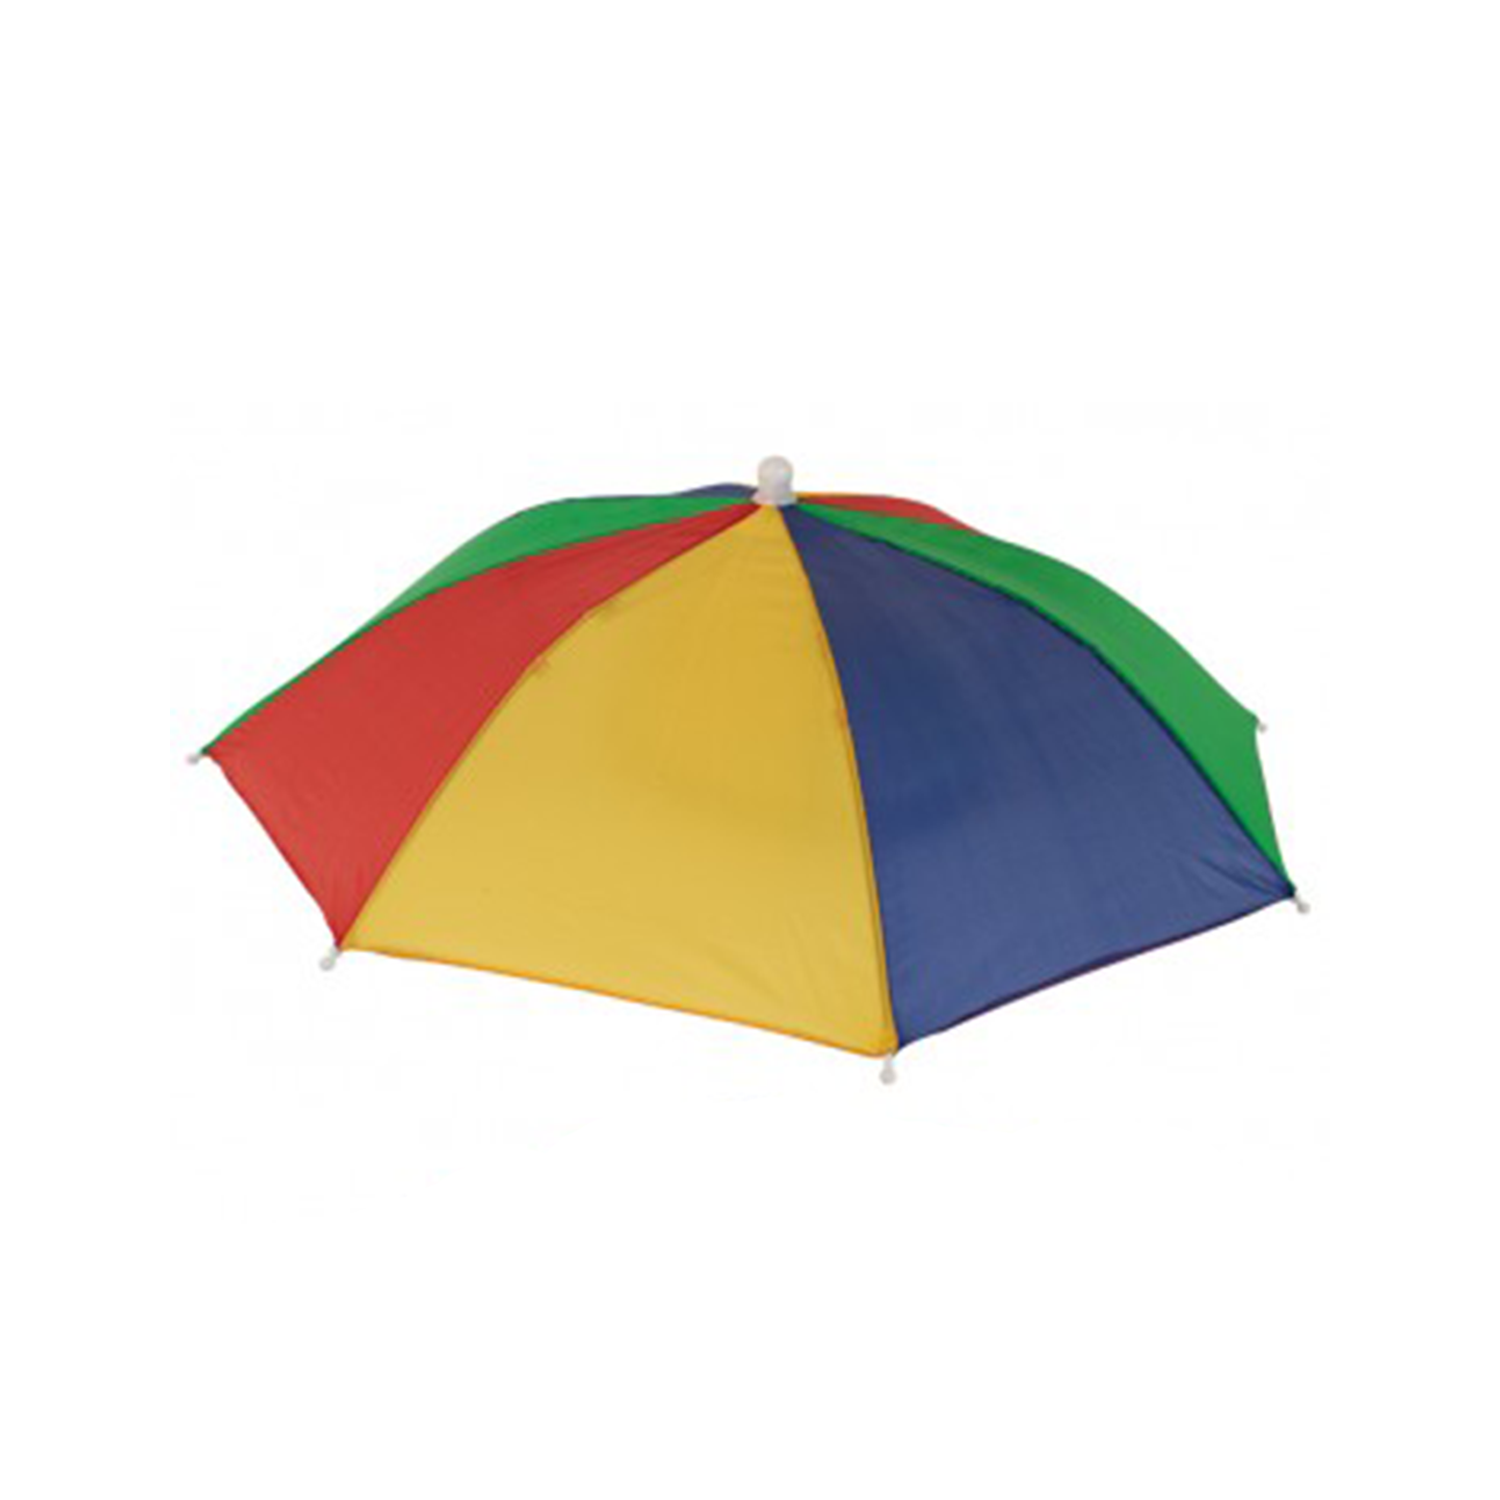 Hoofd paraplu gekleurd kopen? Oeteldonkstijl